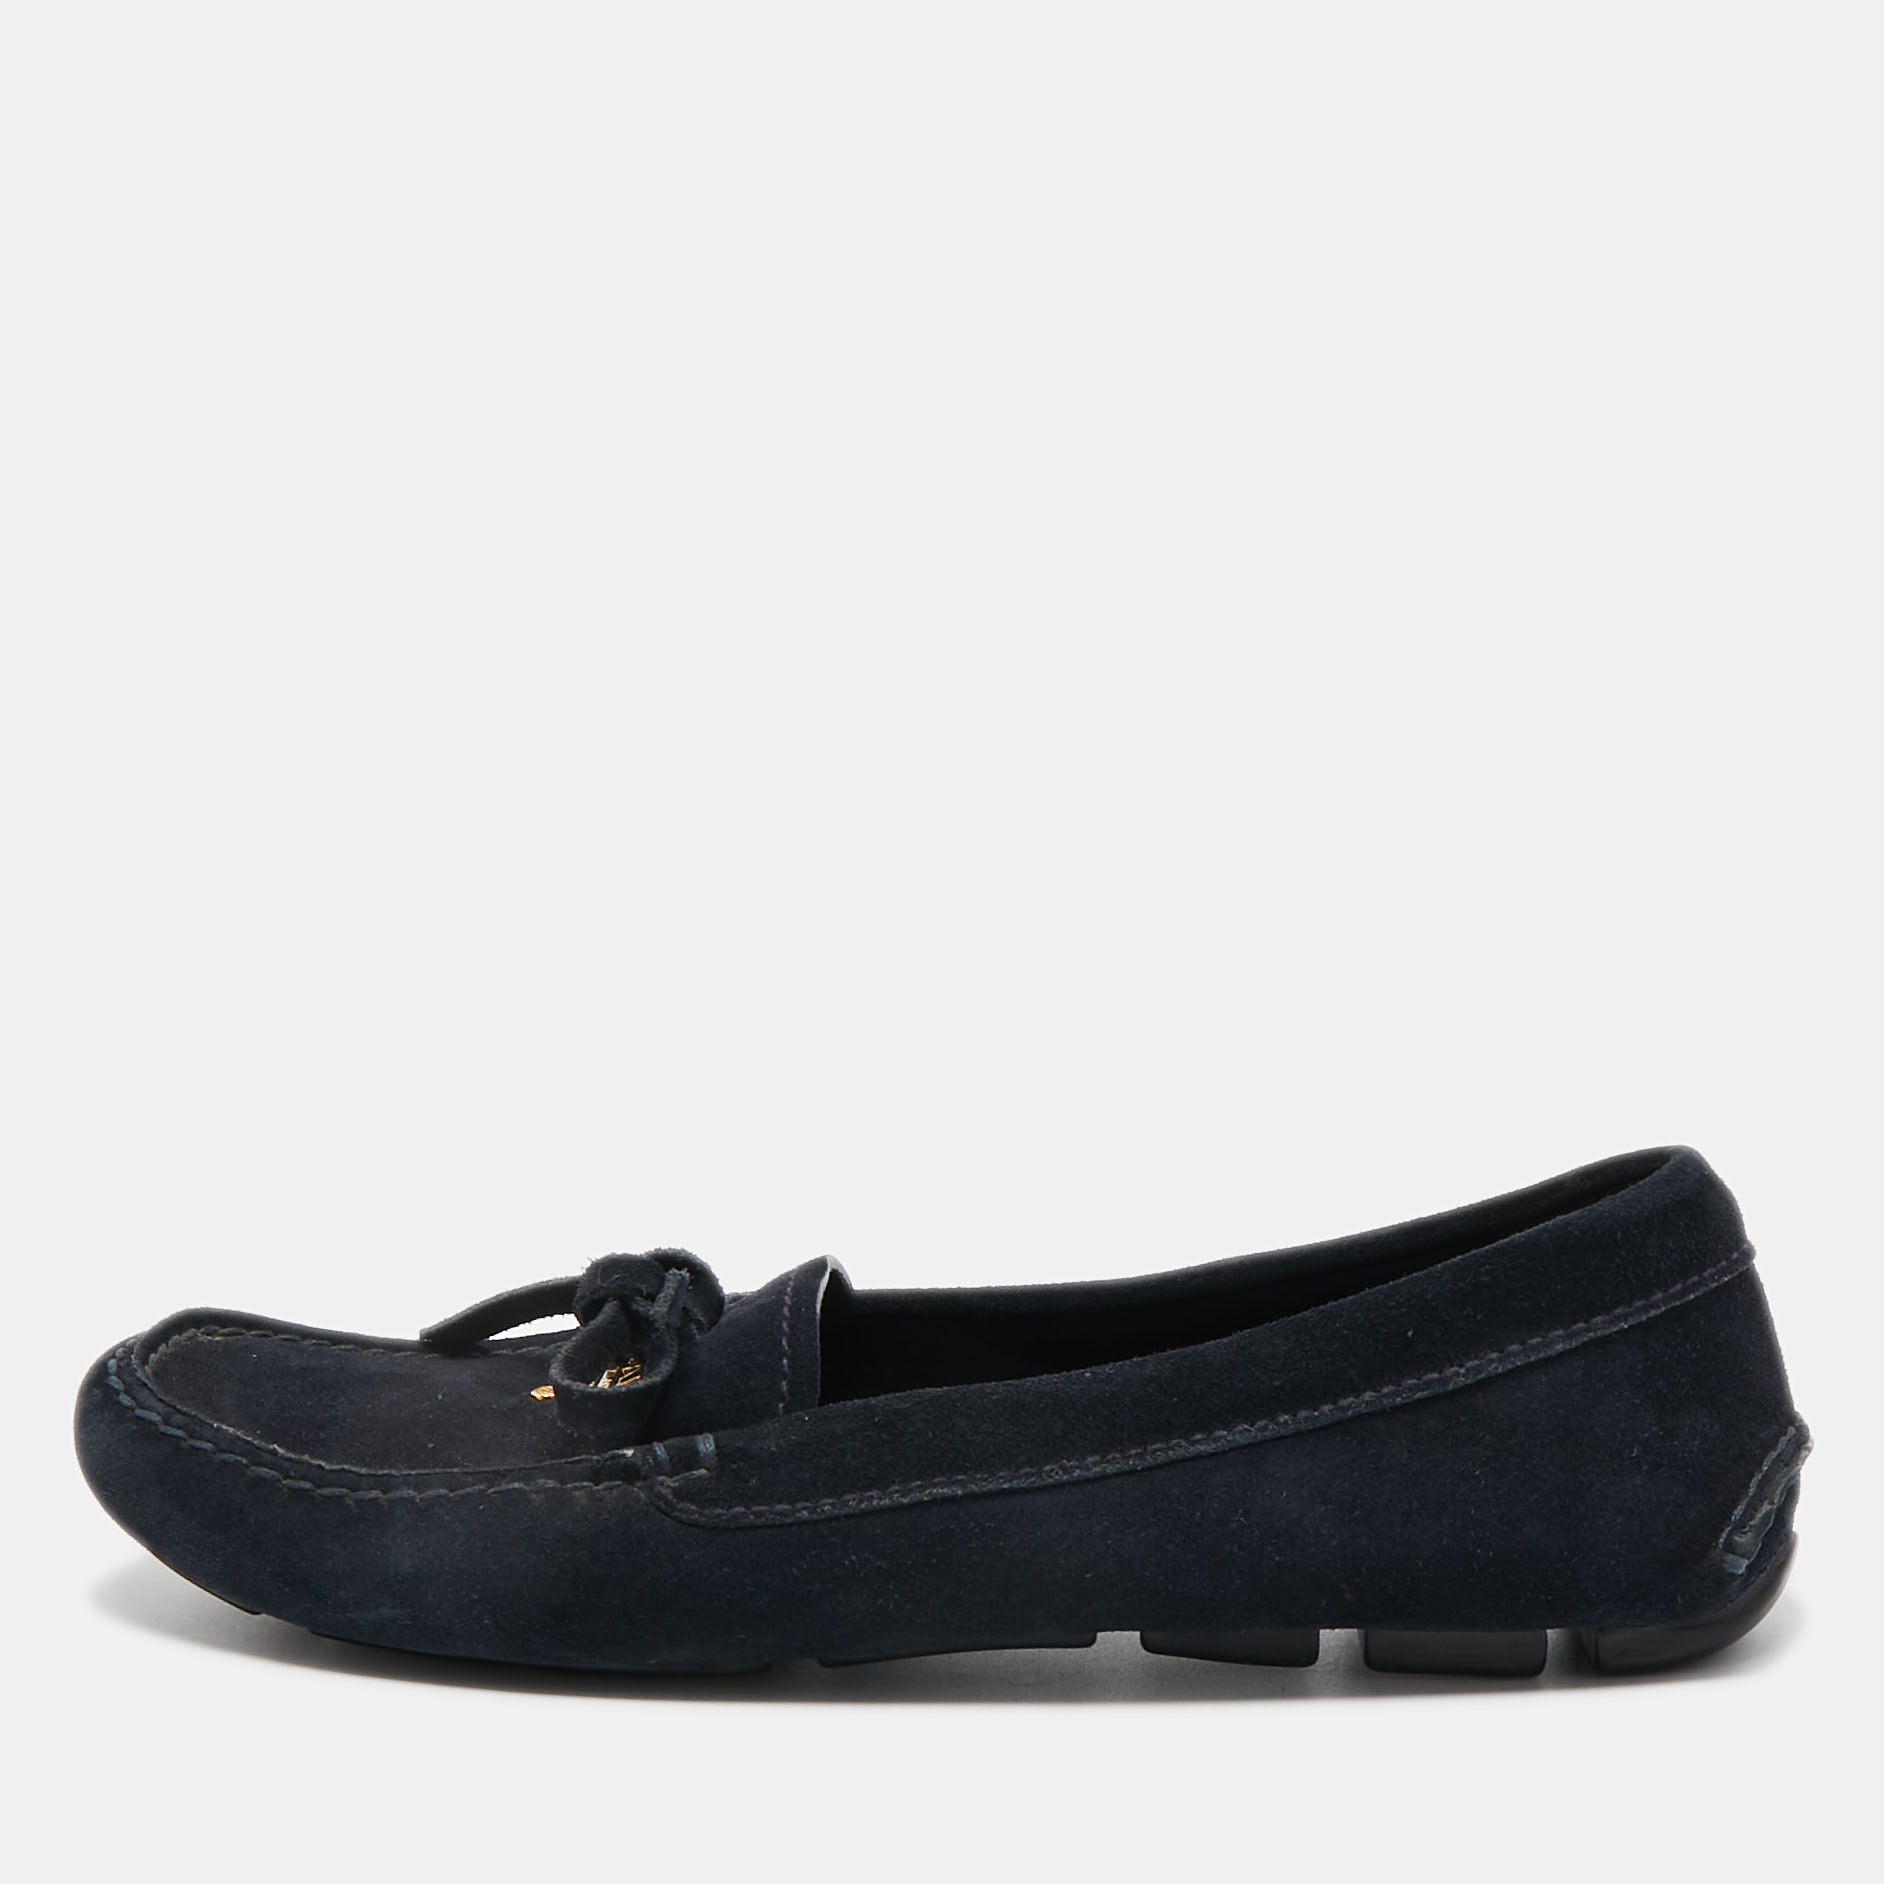 Prada dark blue suede bow slip on loafers size 35.5